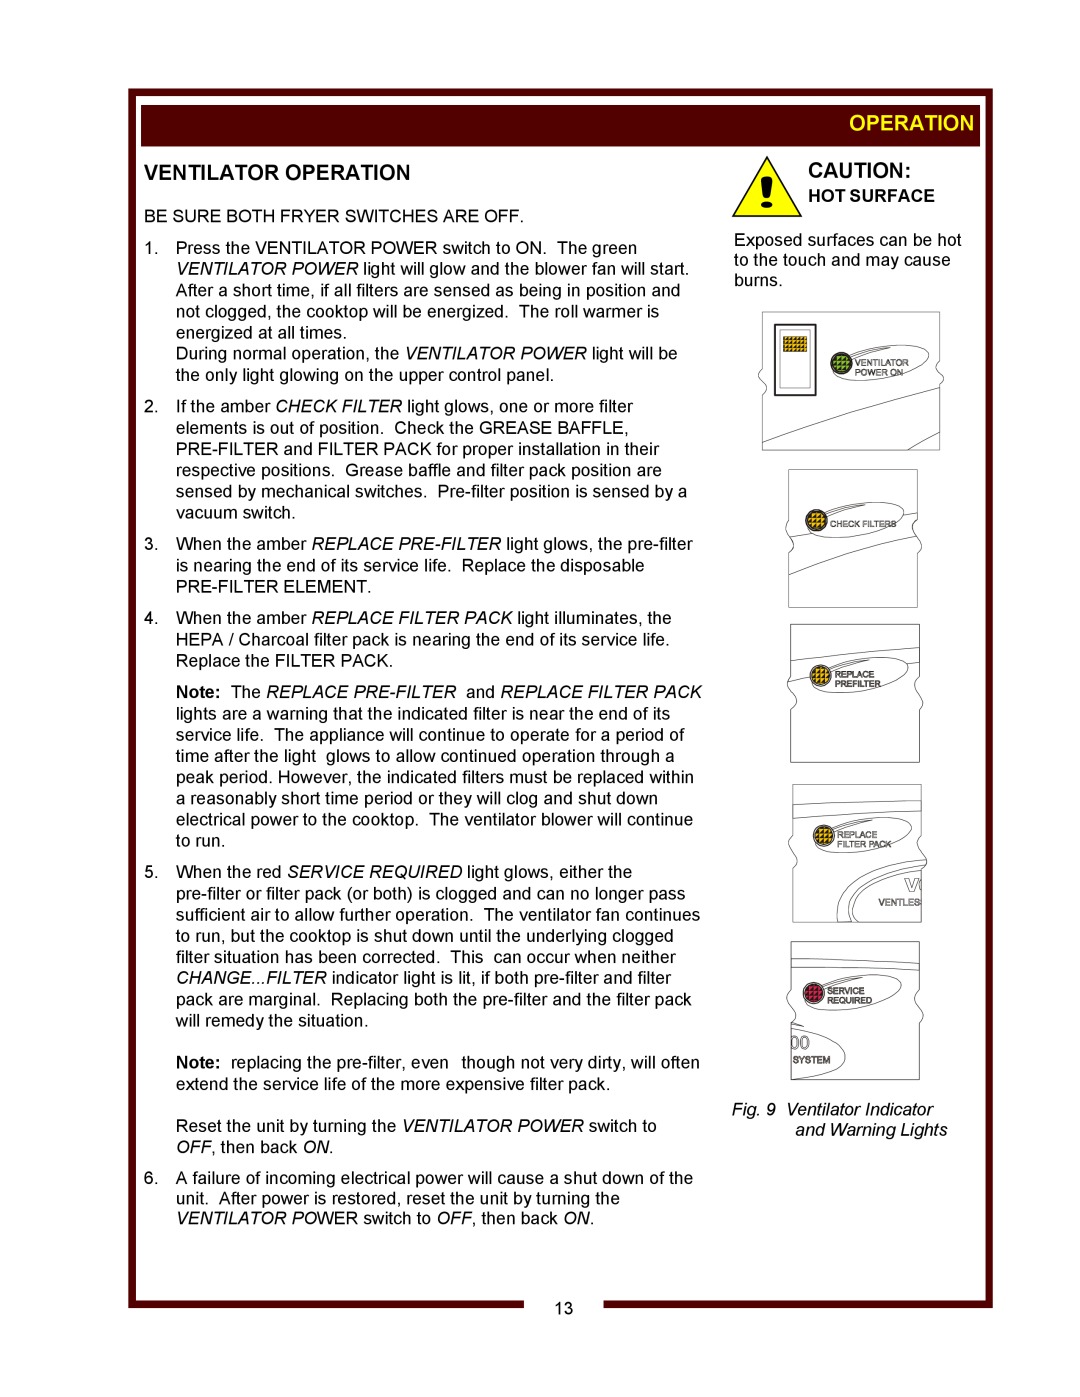 Wells WVF-886 operation manual Ventilator Operation, Hot Surface, Ventilator Indicator and Warning Lights 